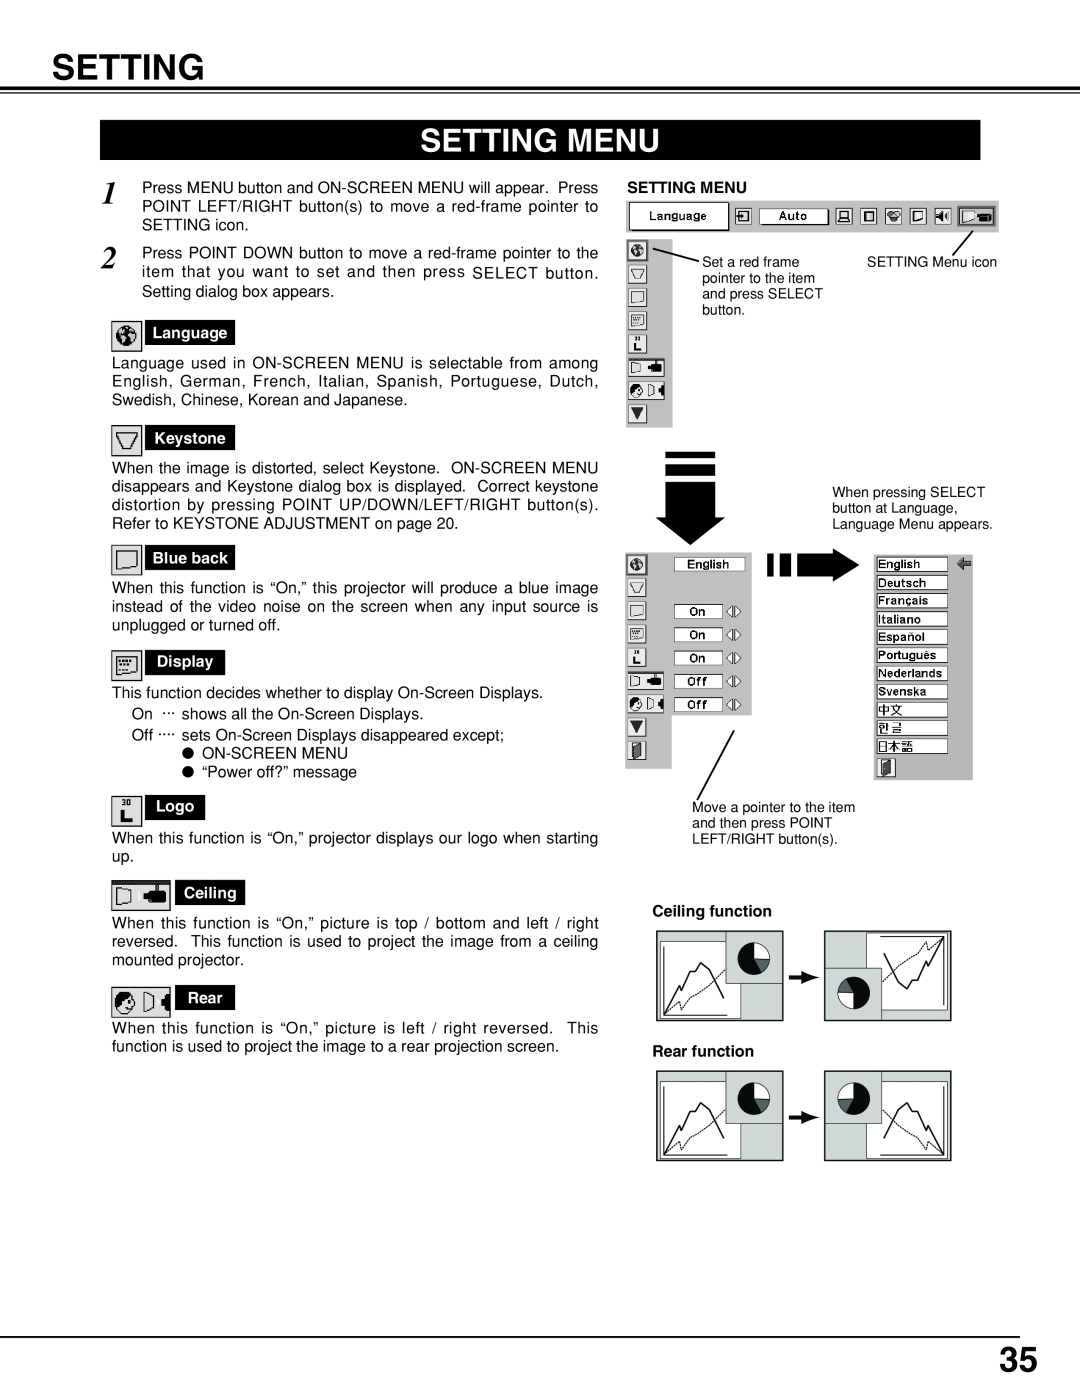 BOXLIGHT CP-306t manual Setting Menu, Language, Keystone, Blue back, Display, Logo, Ceiling, Rear 